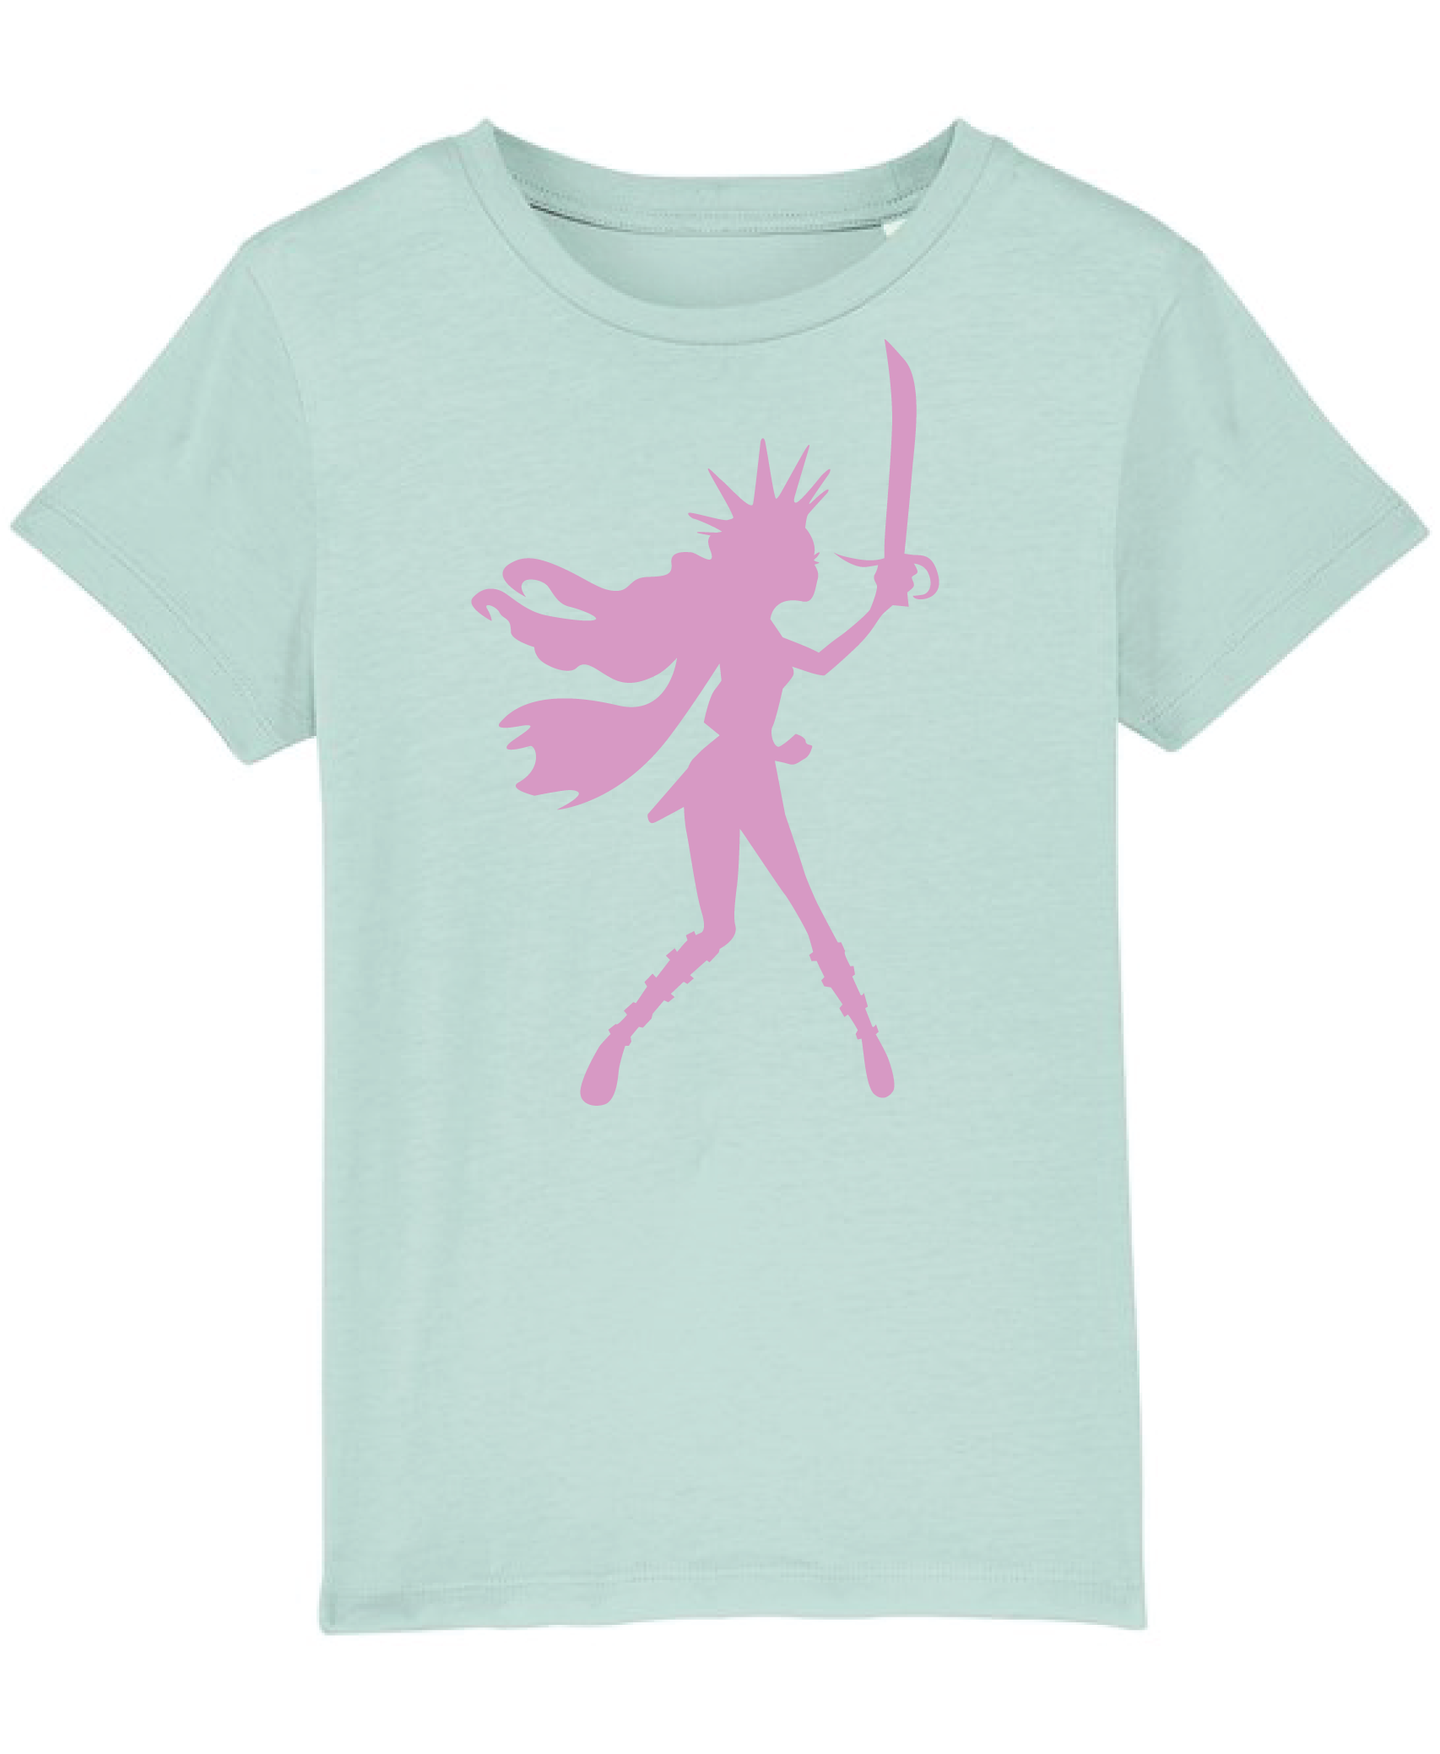 Girls New Organic Caribbean tee shirt with Pink Pirate Queen flock print